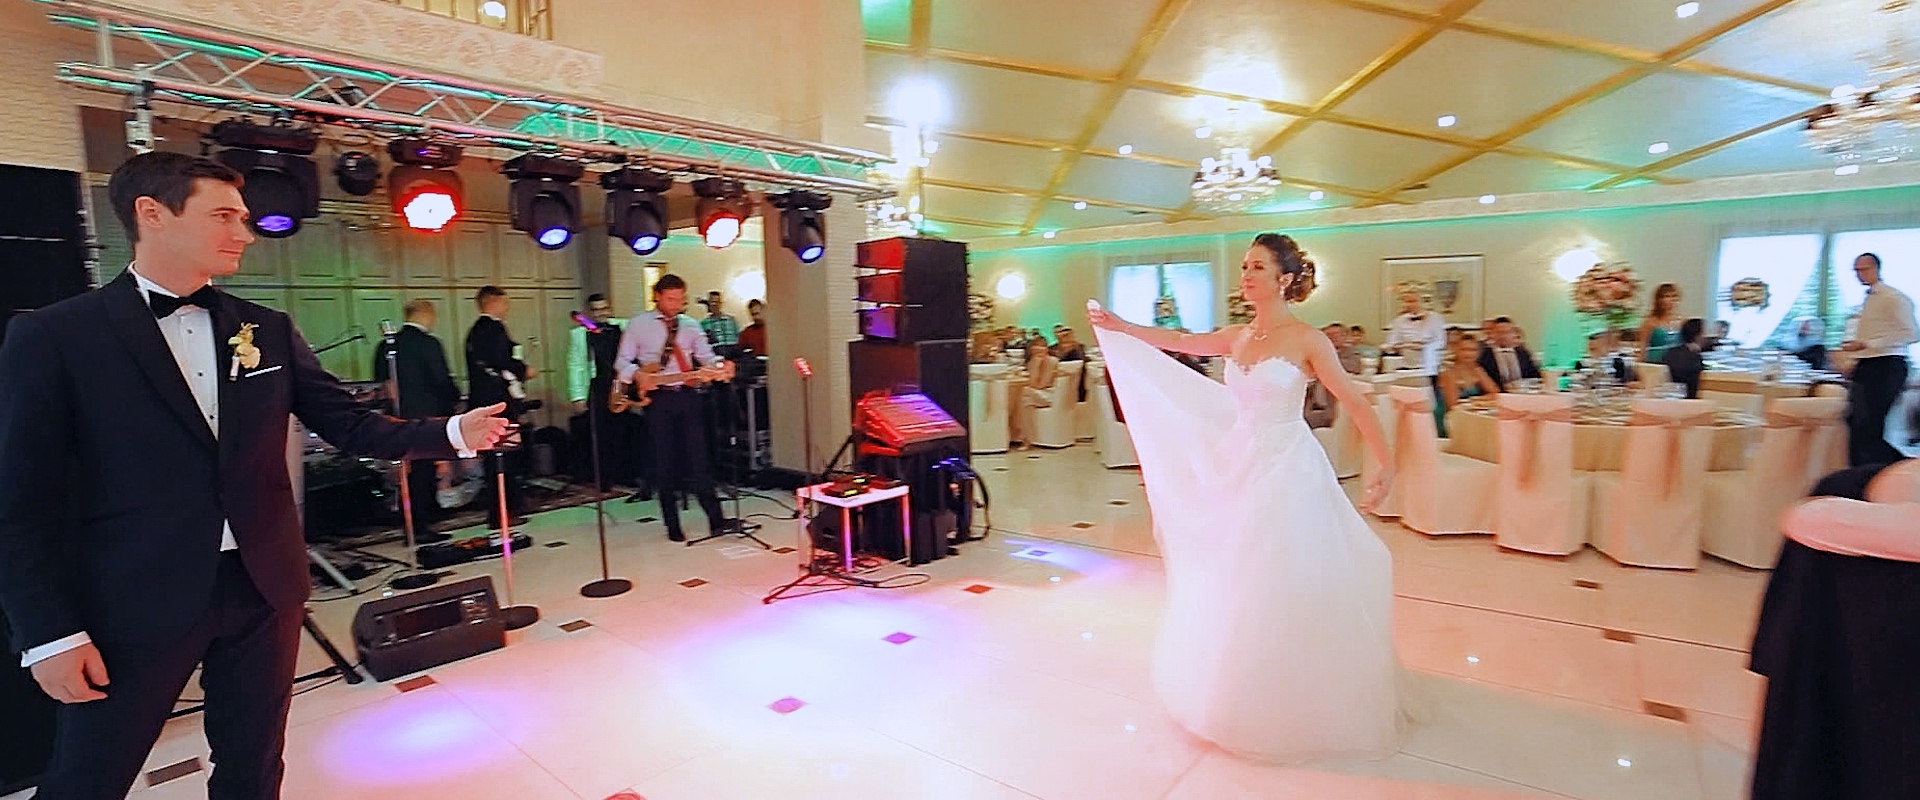 DaVinci venue, Cluj, Transylvania - Wedding first dance